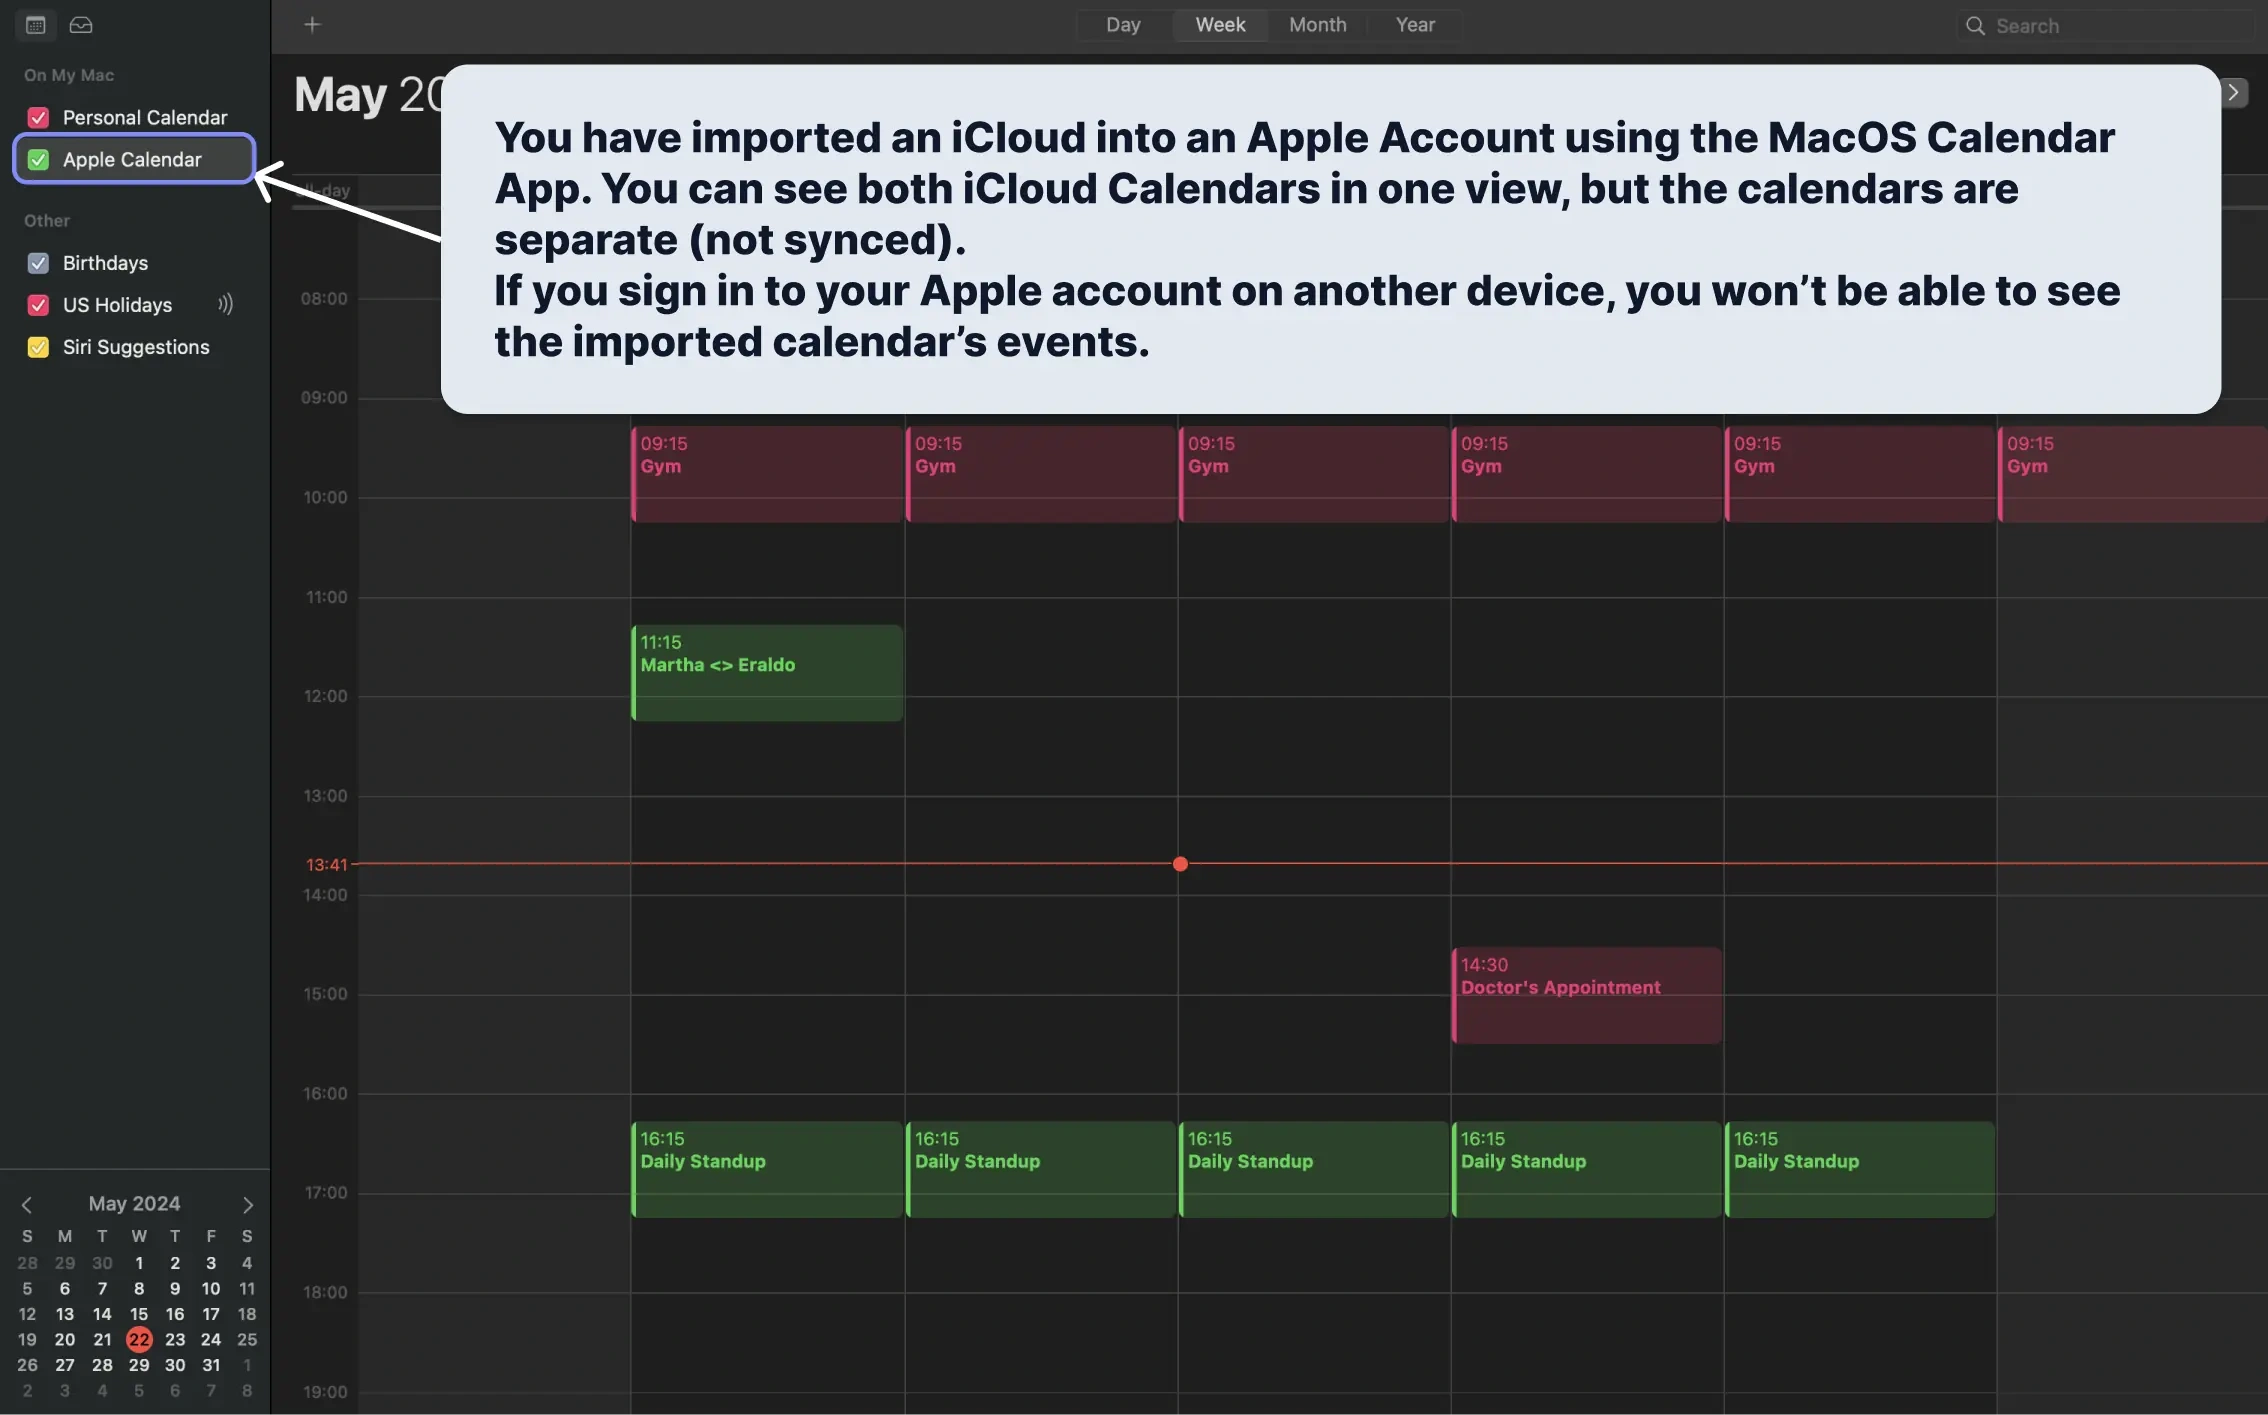 Imported iCloud Calendar in the Apple Calendar App